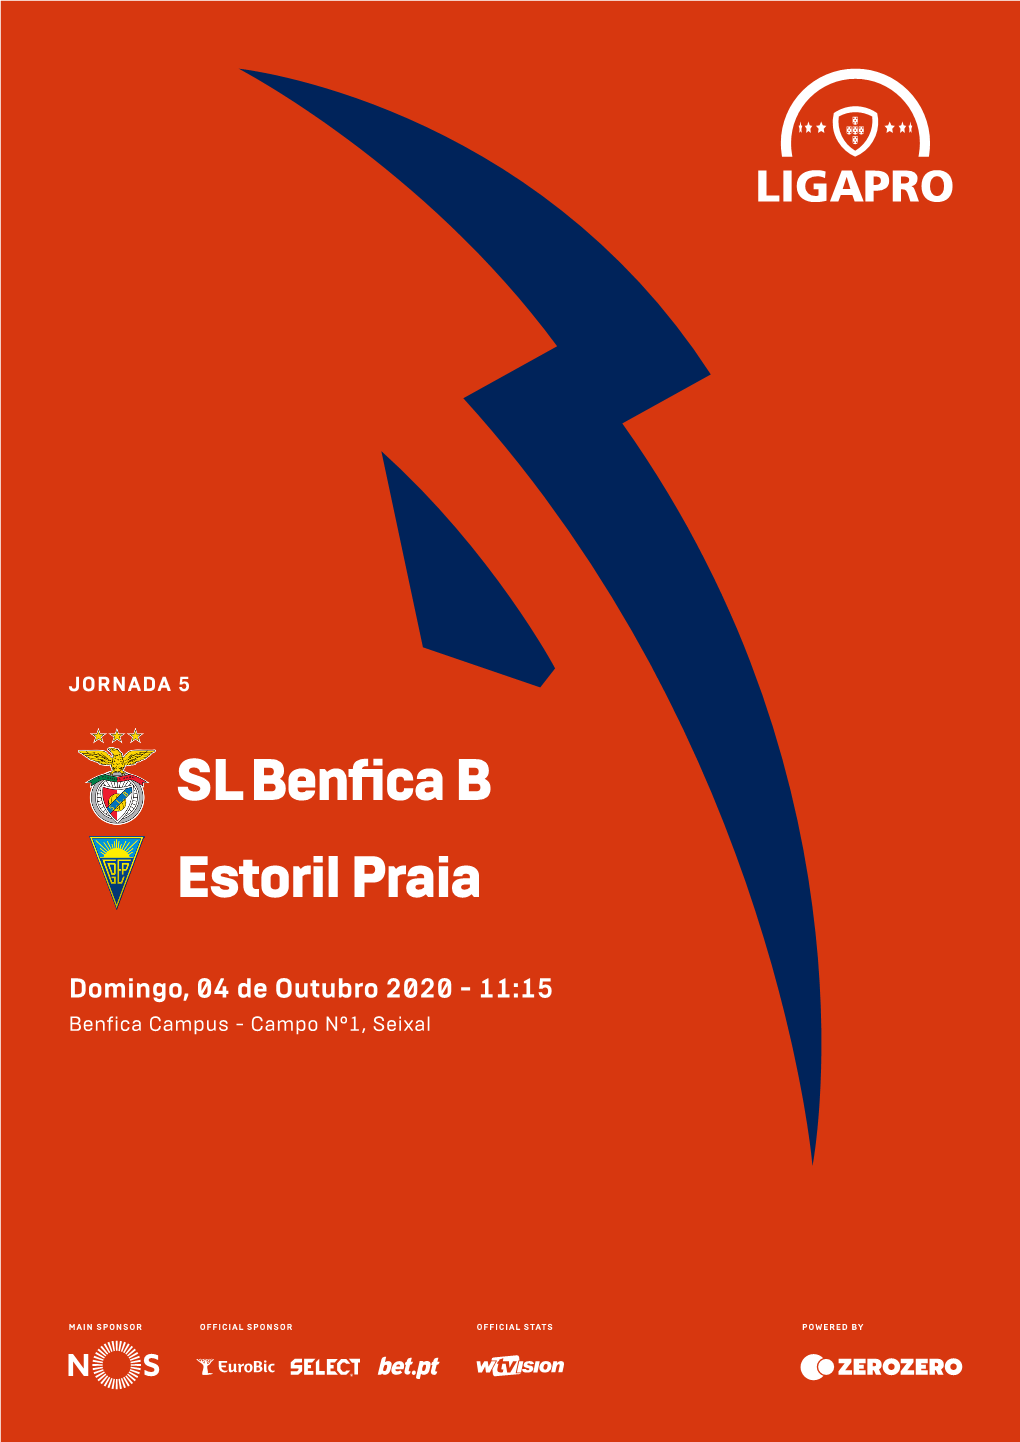 SL Benfica B Estoril Praia